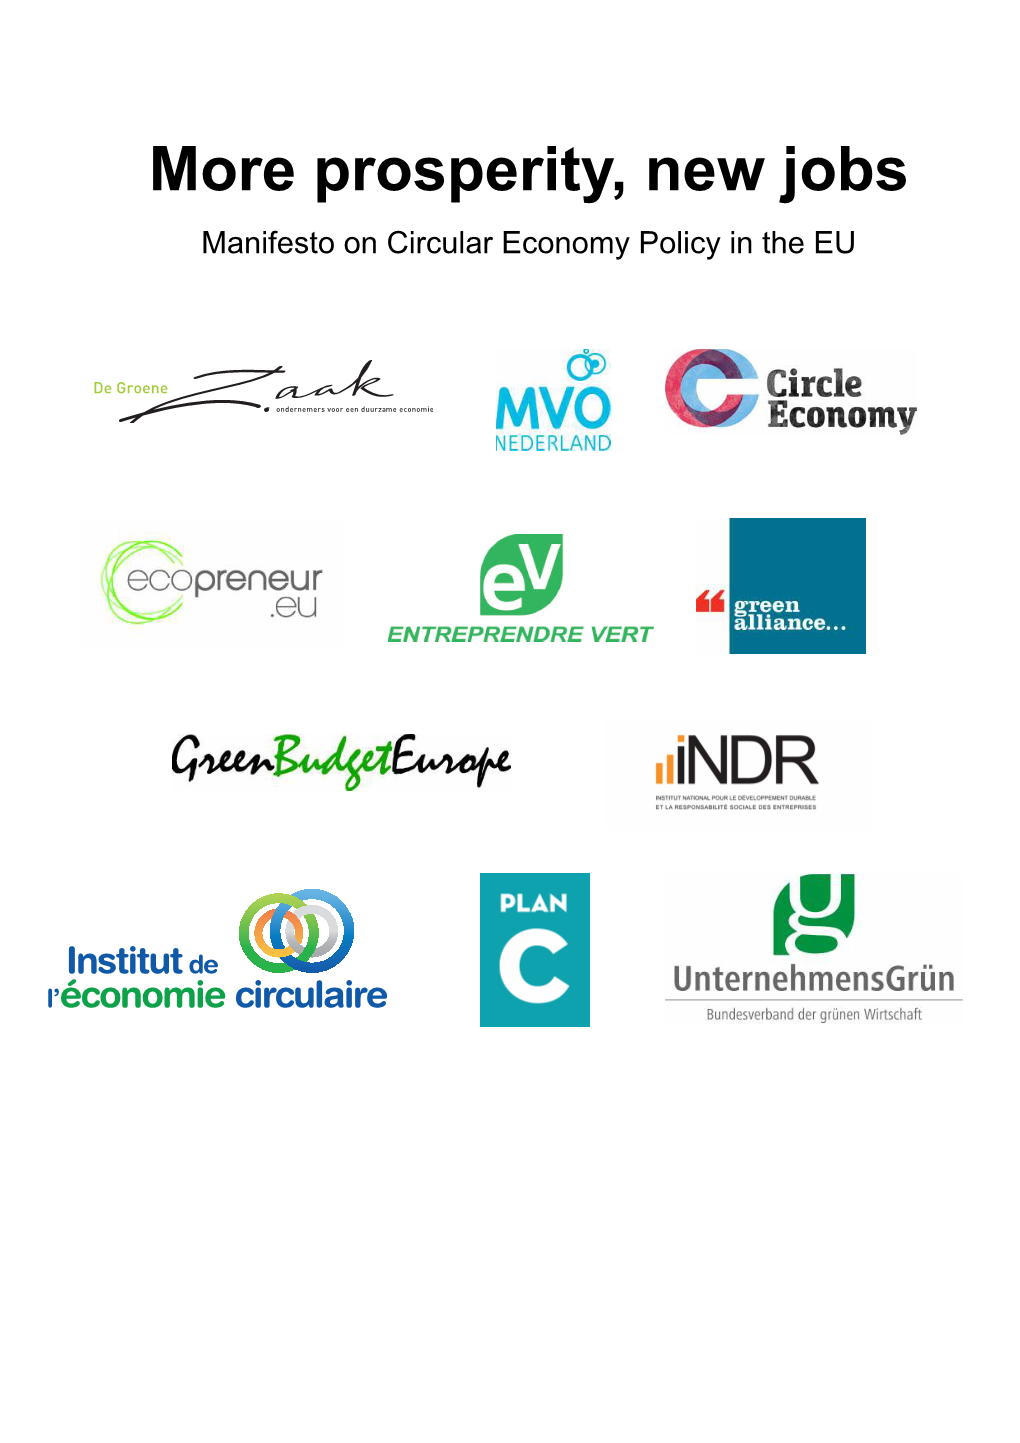 Manifesto on Circular Economy Policy in the EU